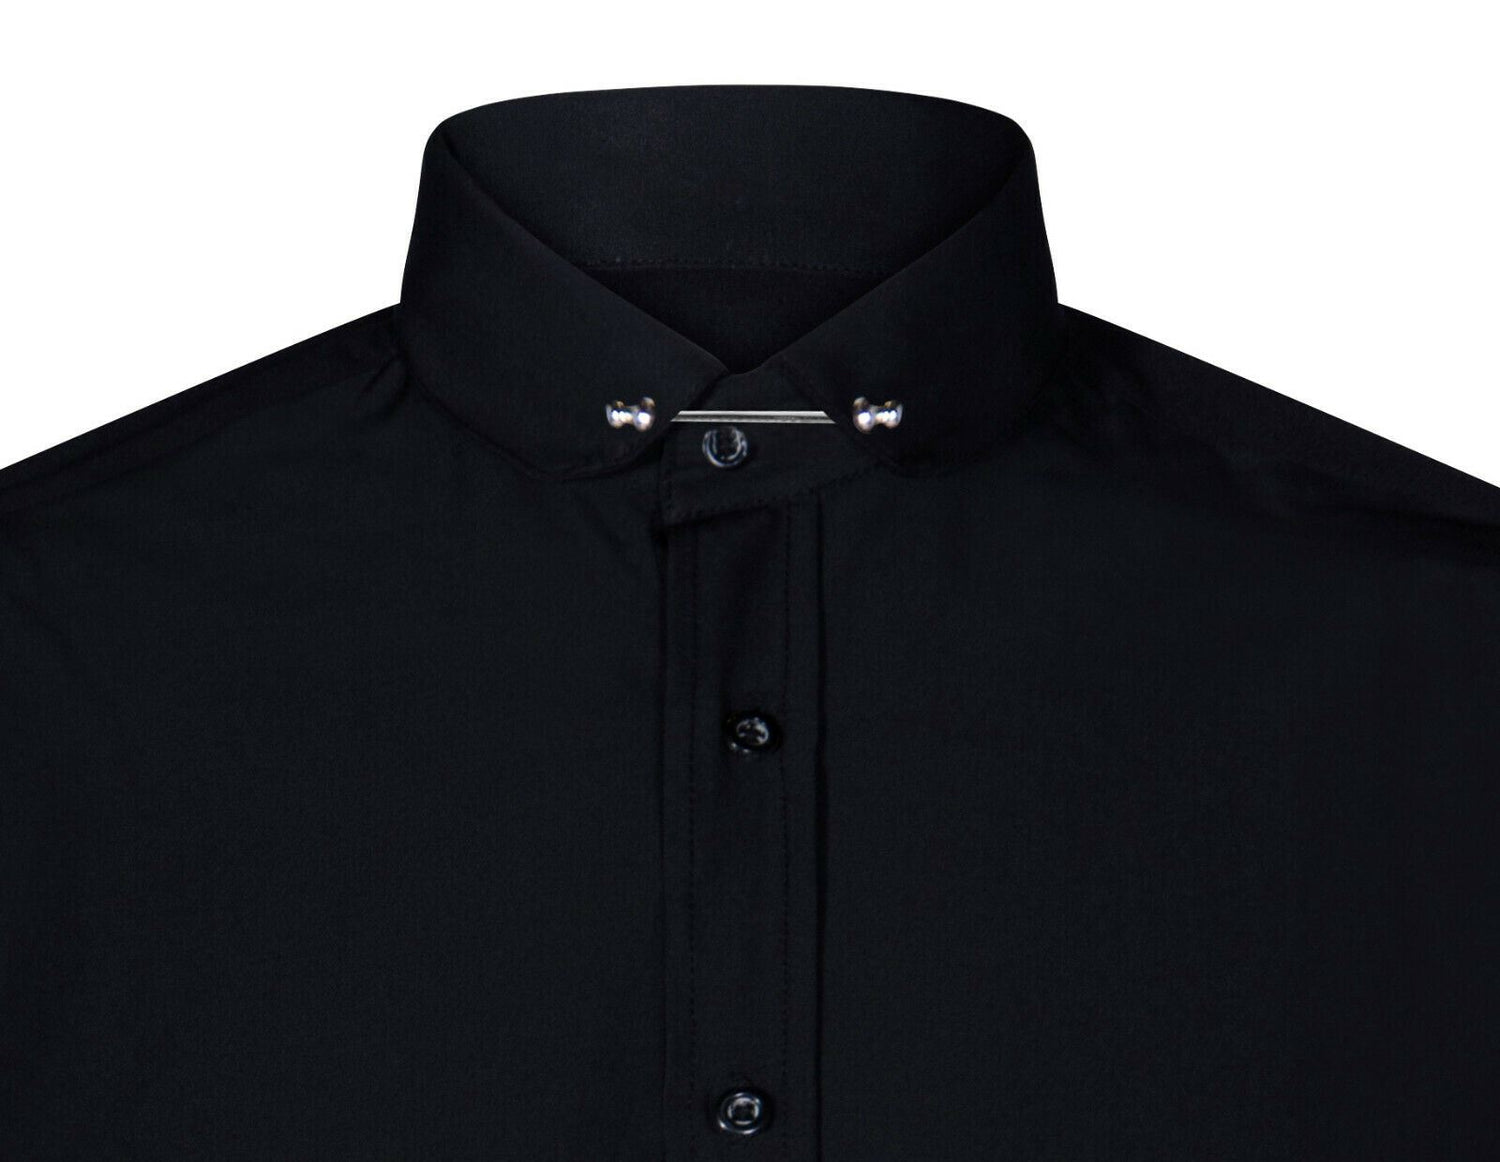 Mens Club Collar Black Shirt 1920s Peaky Blinders With Bar Poplin Pin Smart